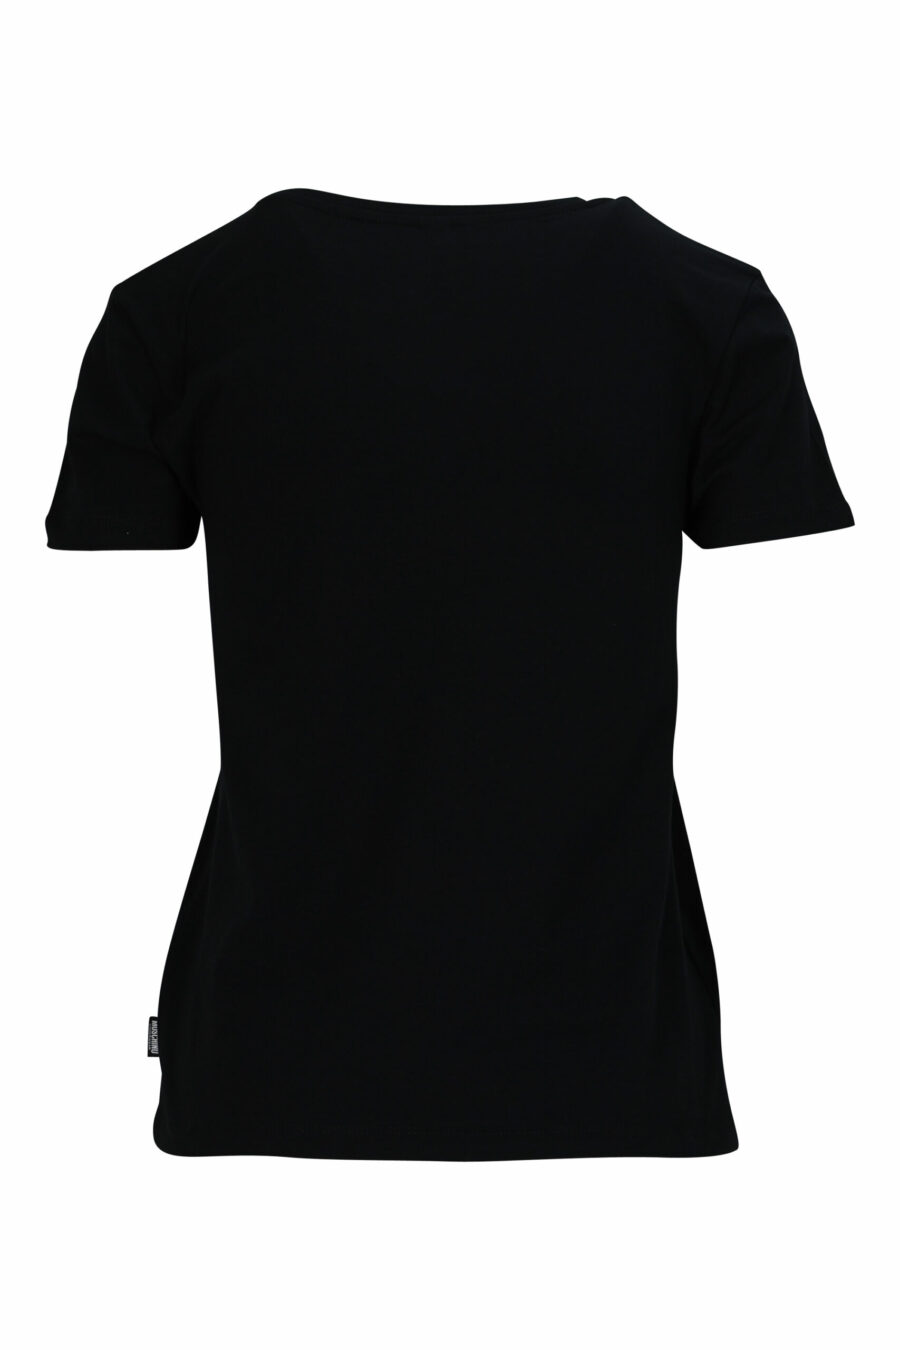 Camiseta negra con logo oso "underbear" parche - 667113697376 1 scaled